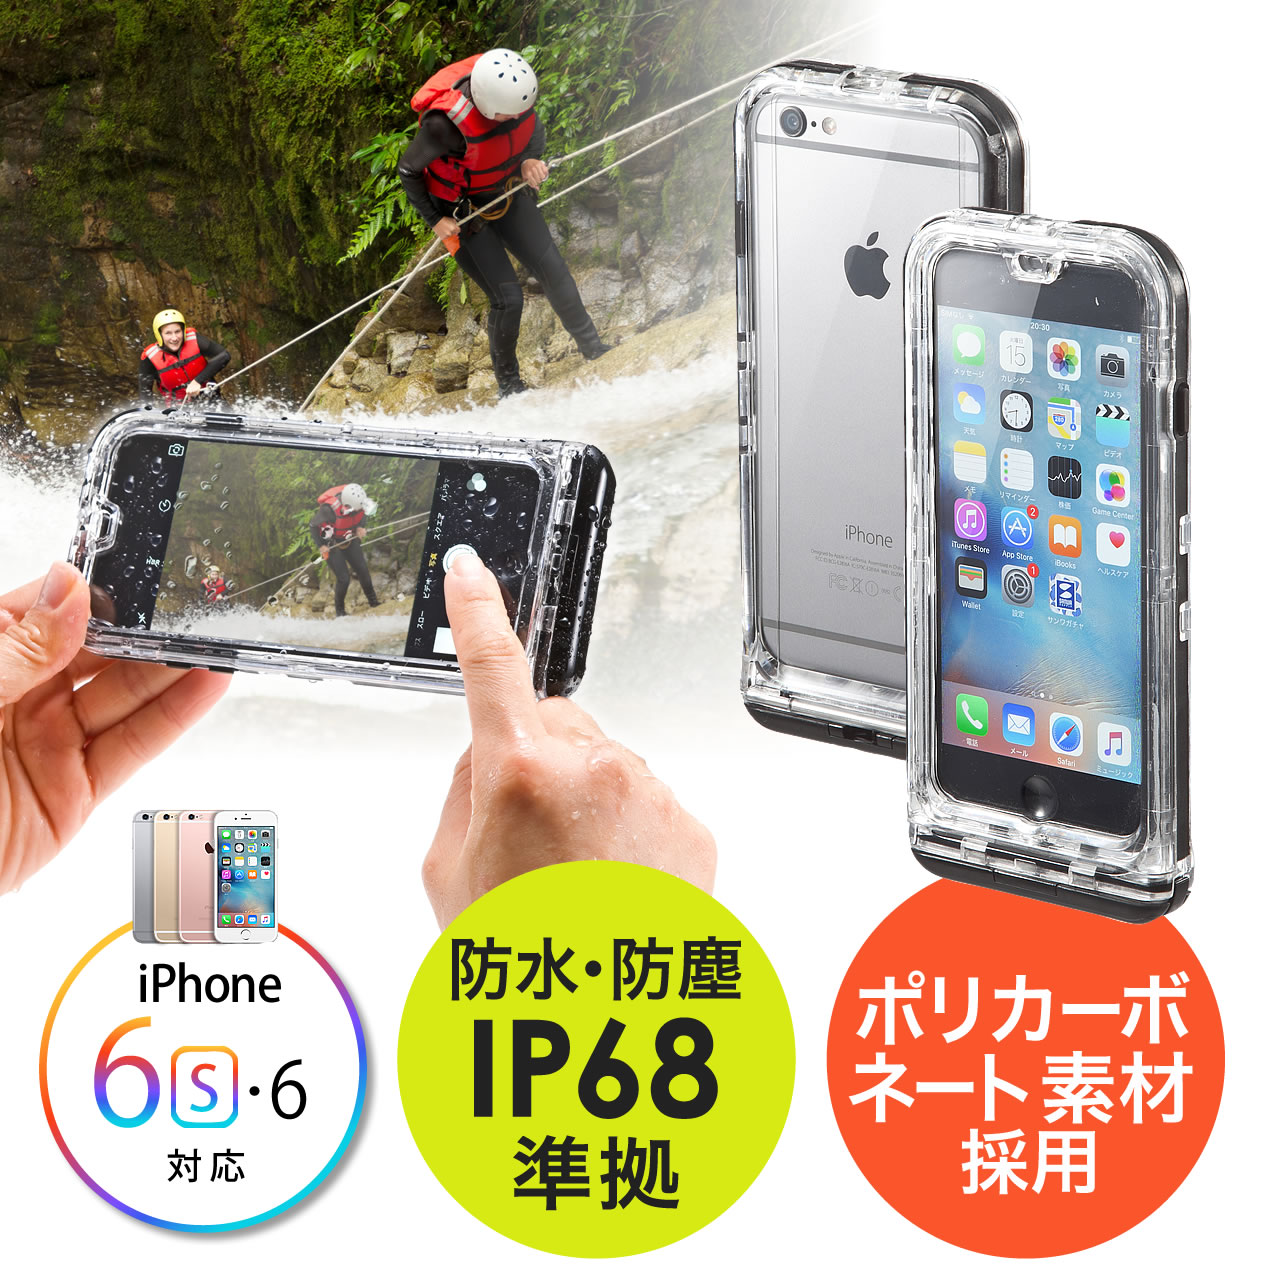 Iphone 6s 6 防水ハードケース 耐衝撃 Ip68取得 お風呂 カメラ対応 0 Spc012wpの販売商品 通販ならサンワダイレクト